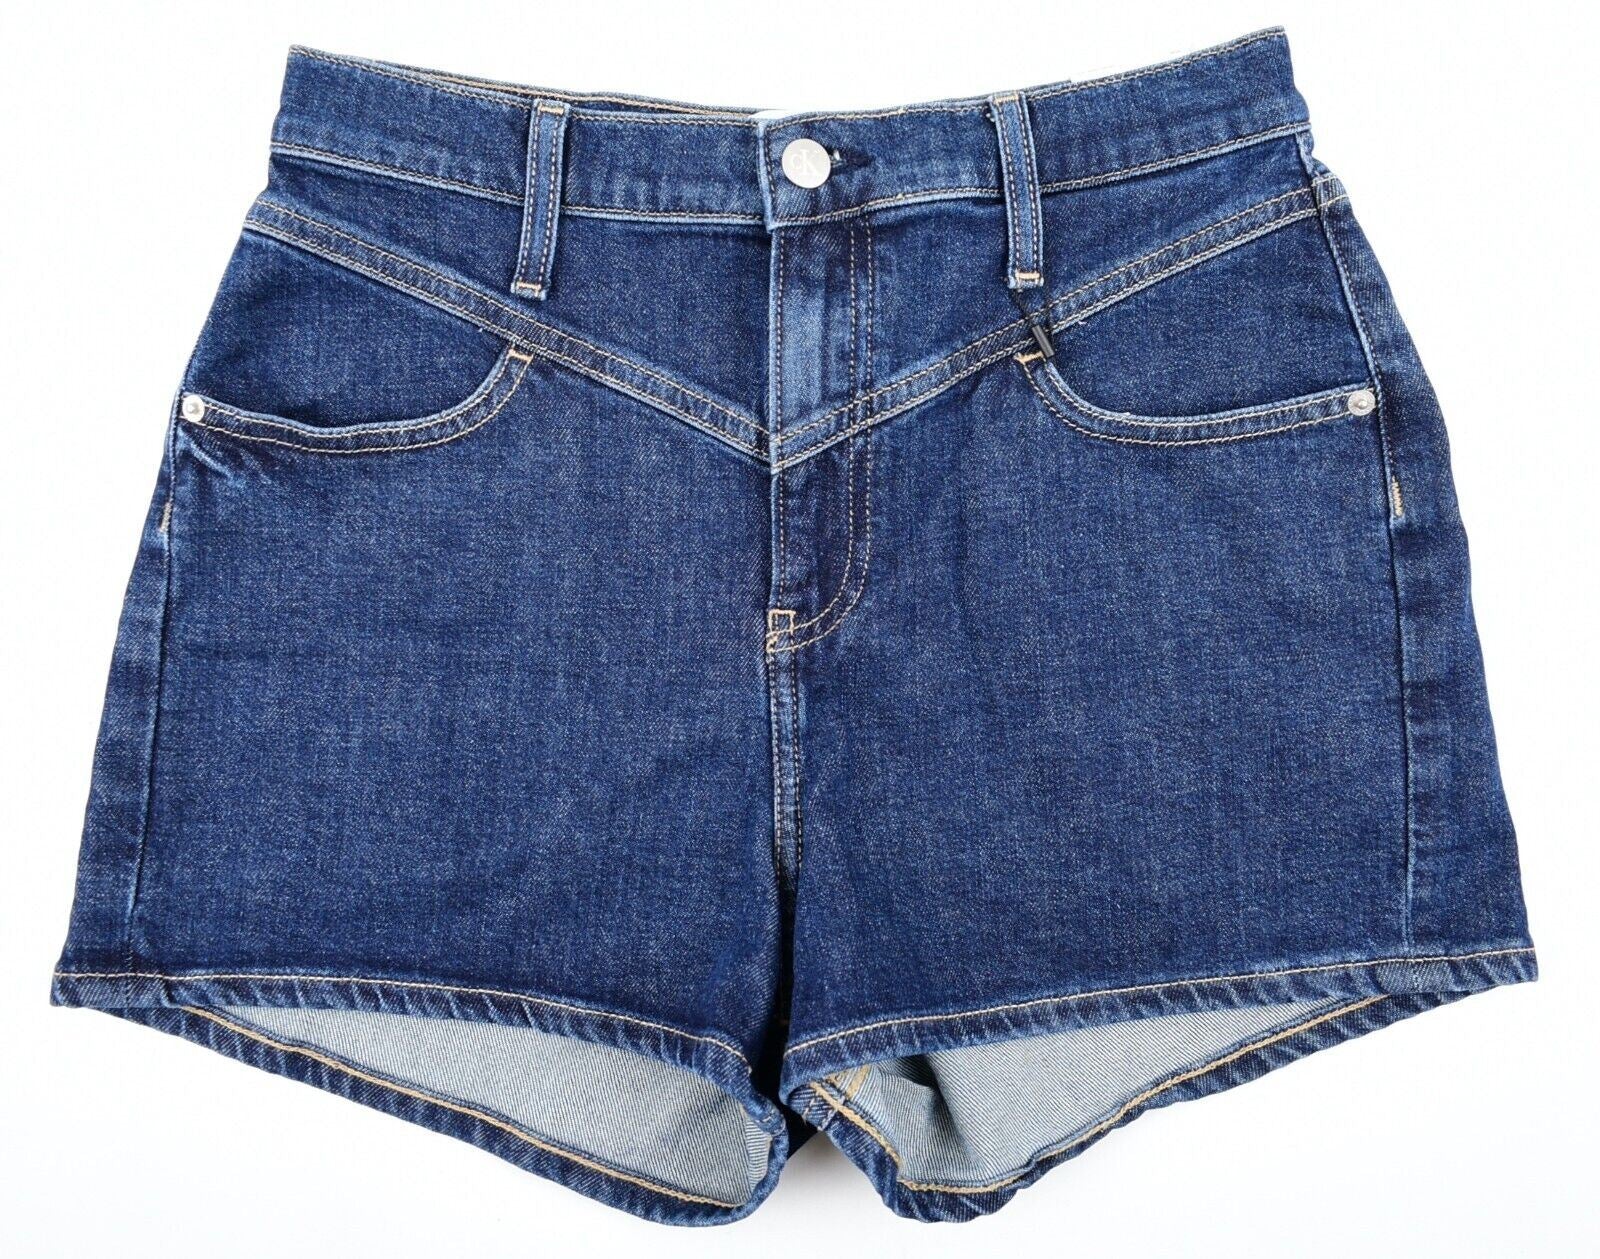 CALVIN KLEIN JEANS Womens High Waist Denim Shorts, Blue, size W28